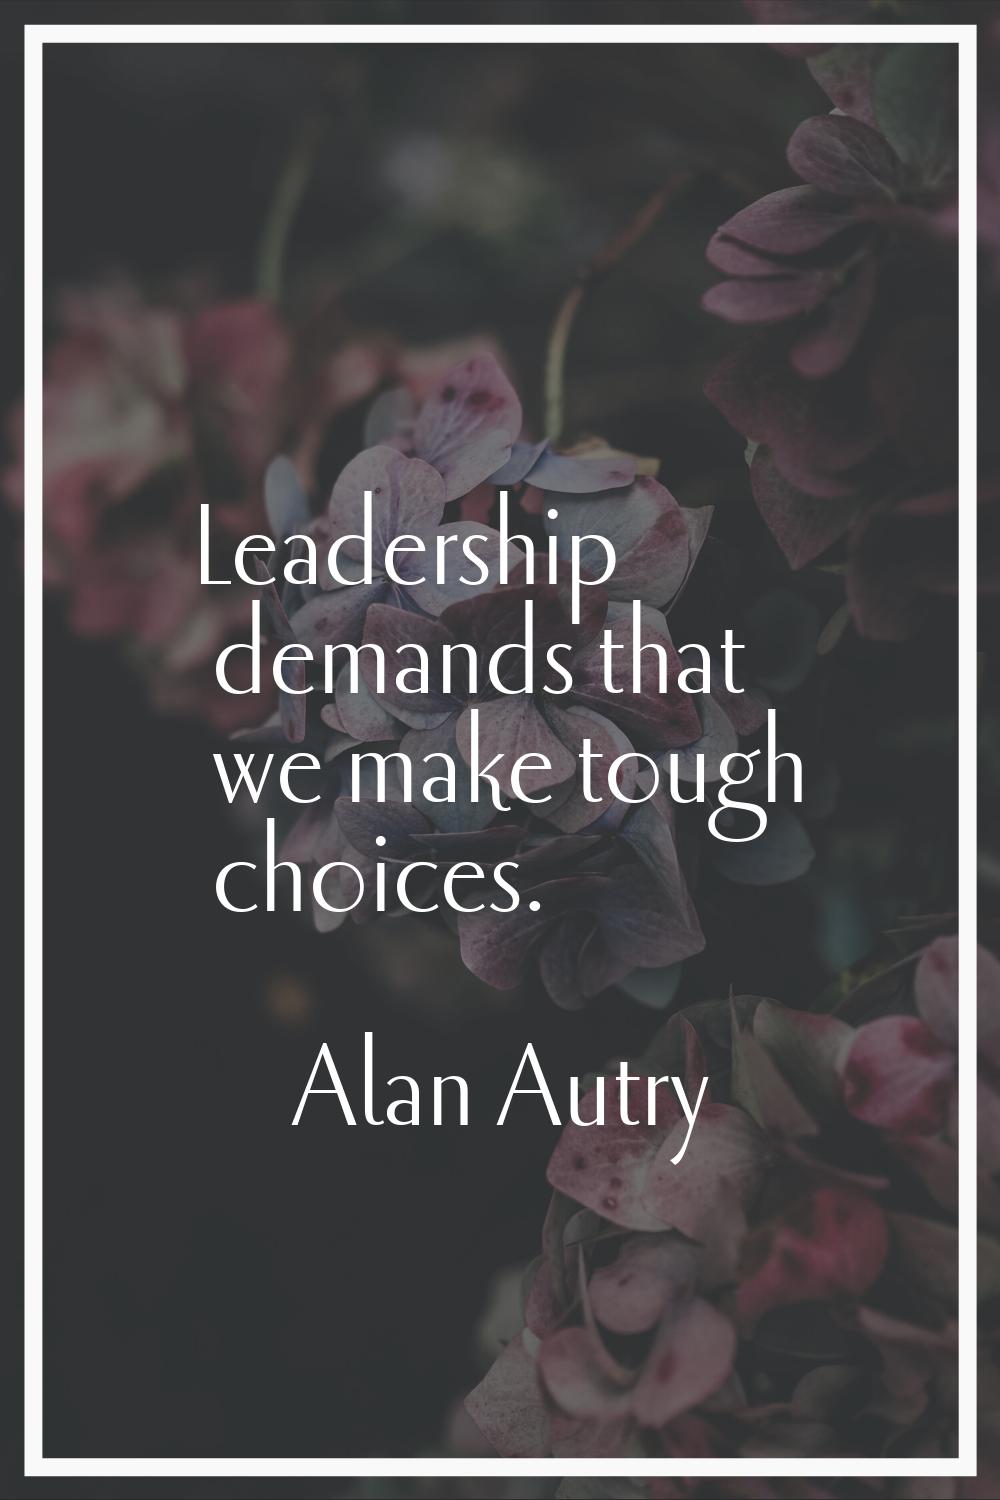 Leadership demands that we make tough choices.